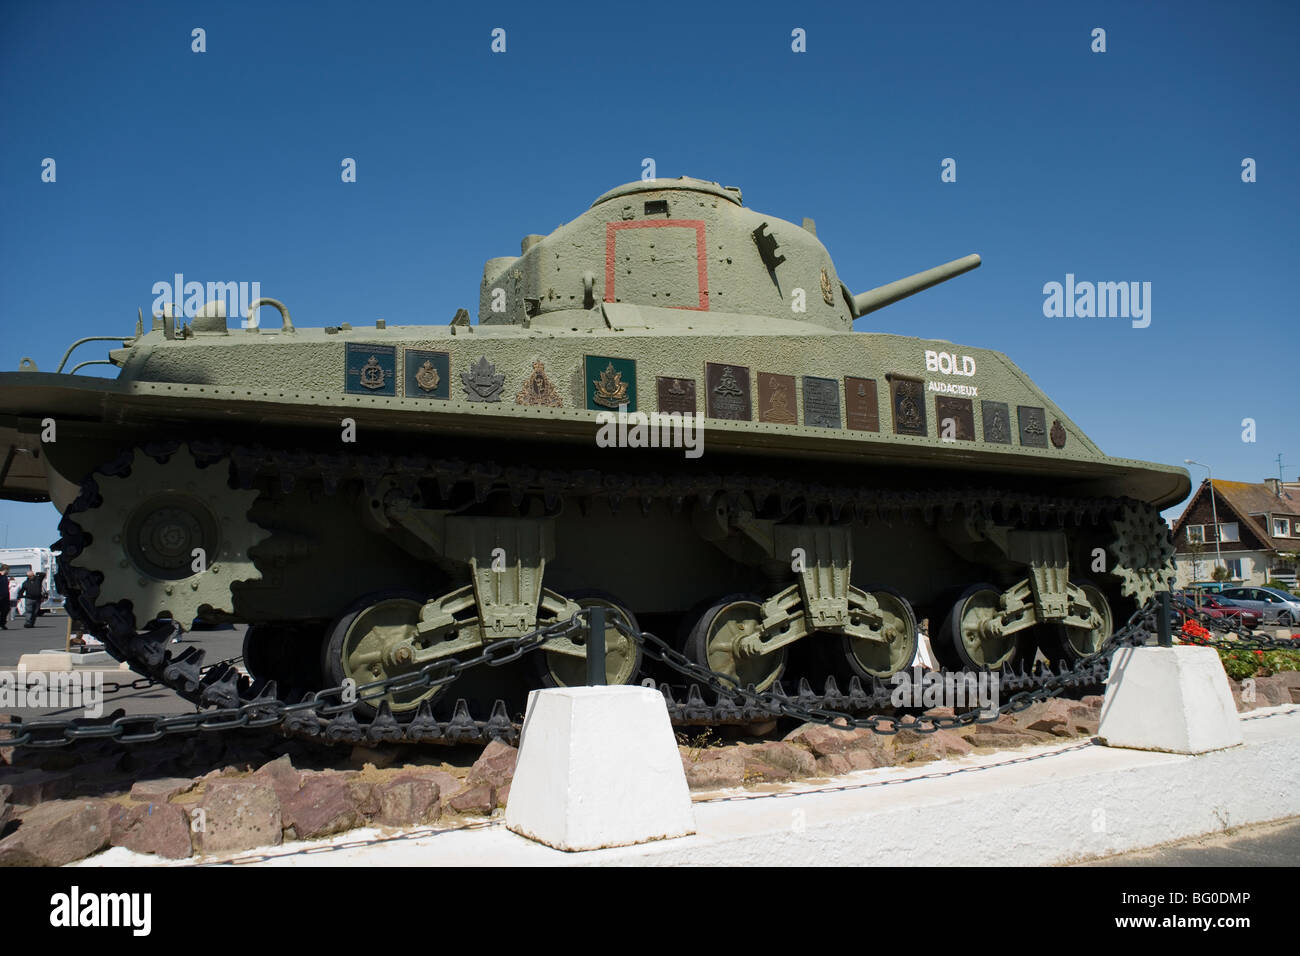 German Tanks : Juno Beach Centre